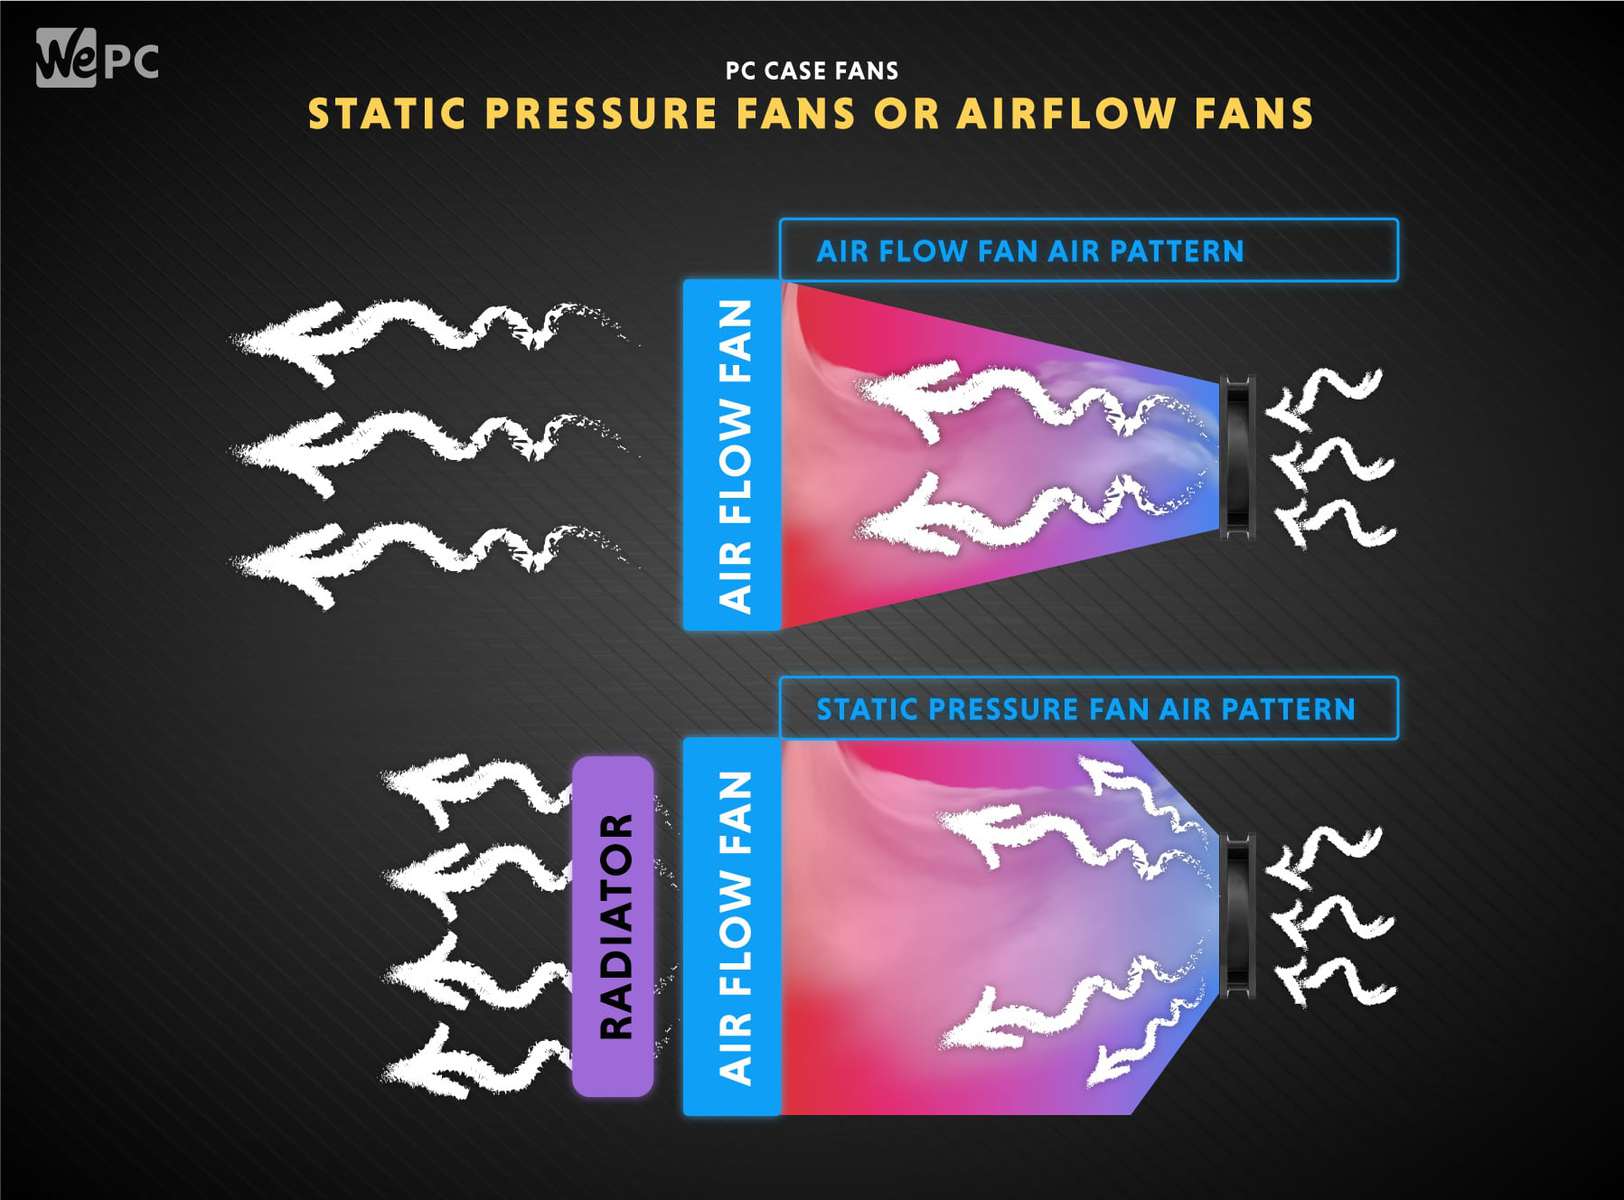 Static Pressure Fans vs Airflow Fans Air Pattern